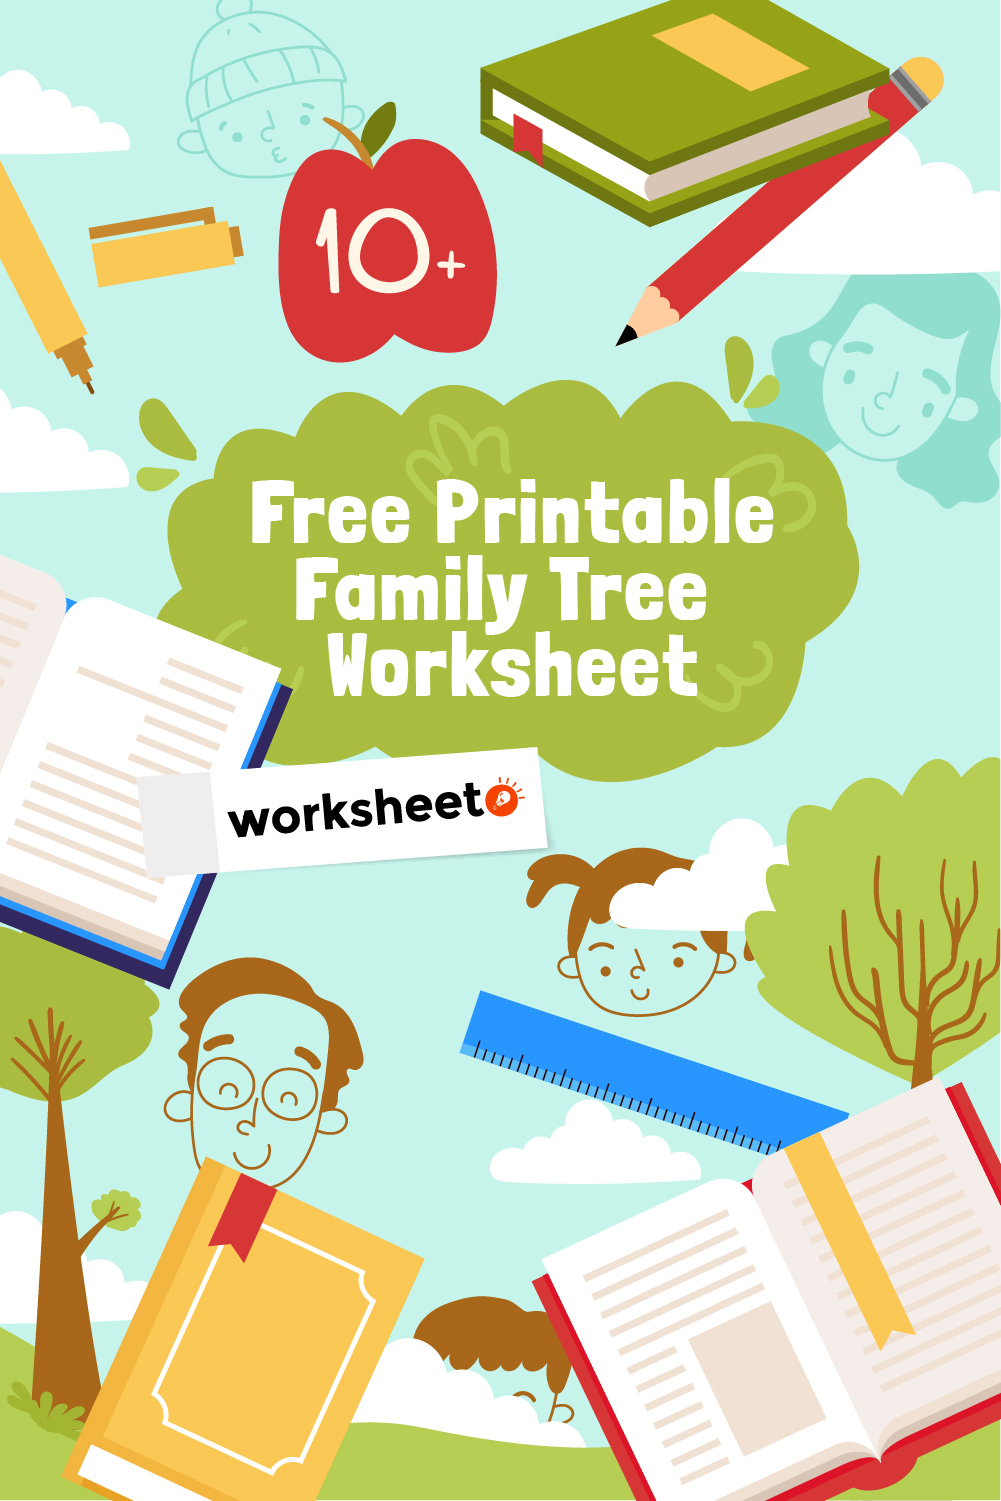 Free Printable Family Tree Worksheet